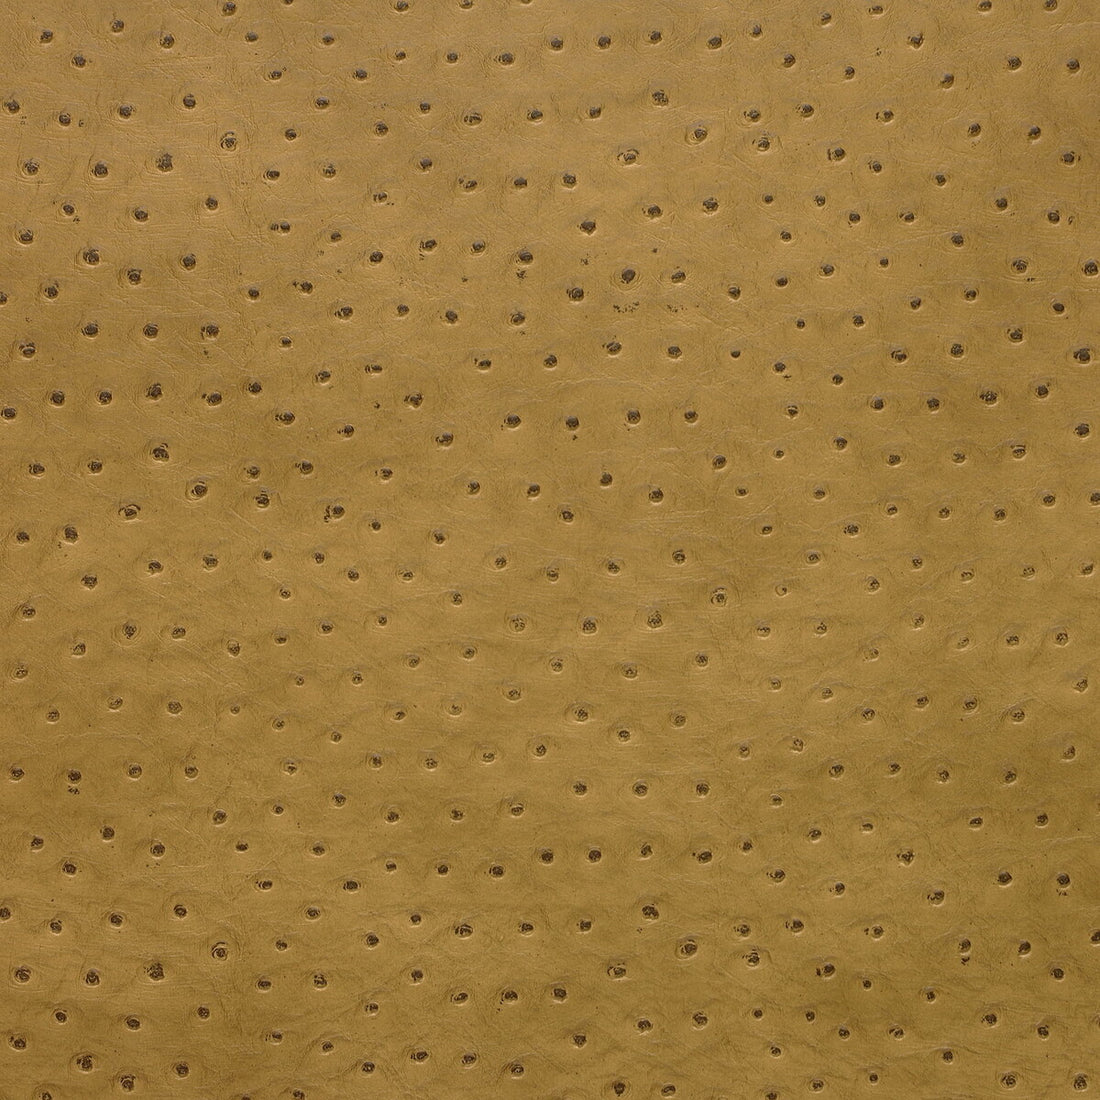 Kravet Design fabric in senna-4 color - pattern SENNA.4.0 - by Kravet Design